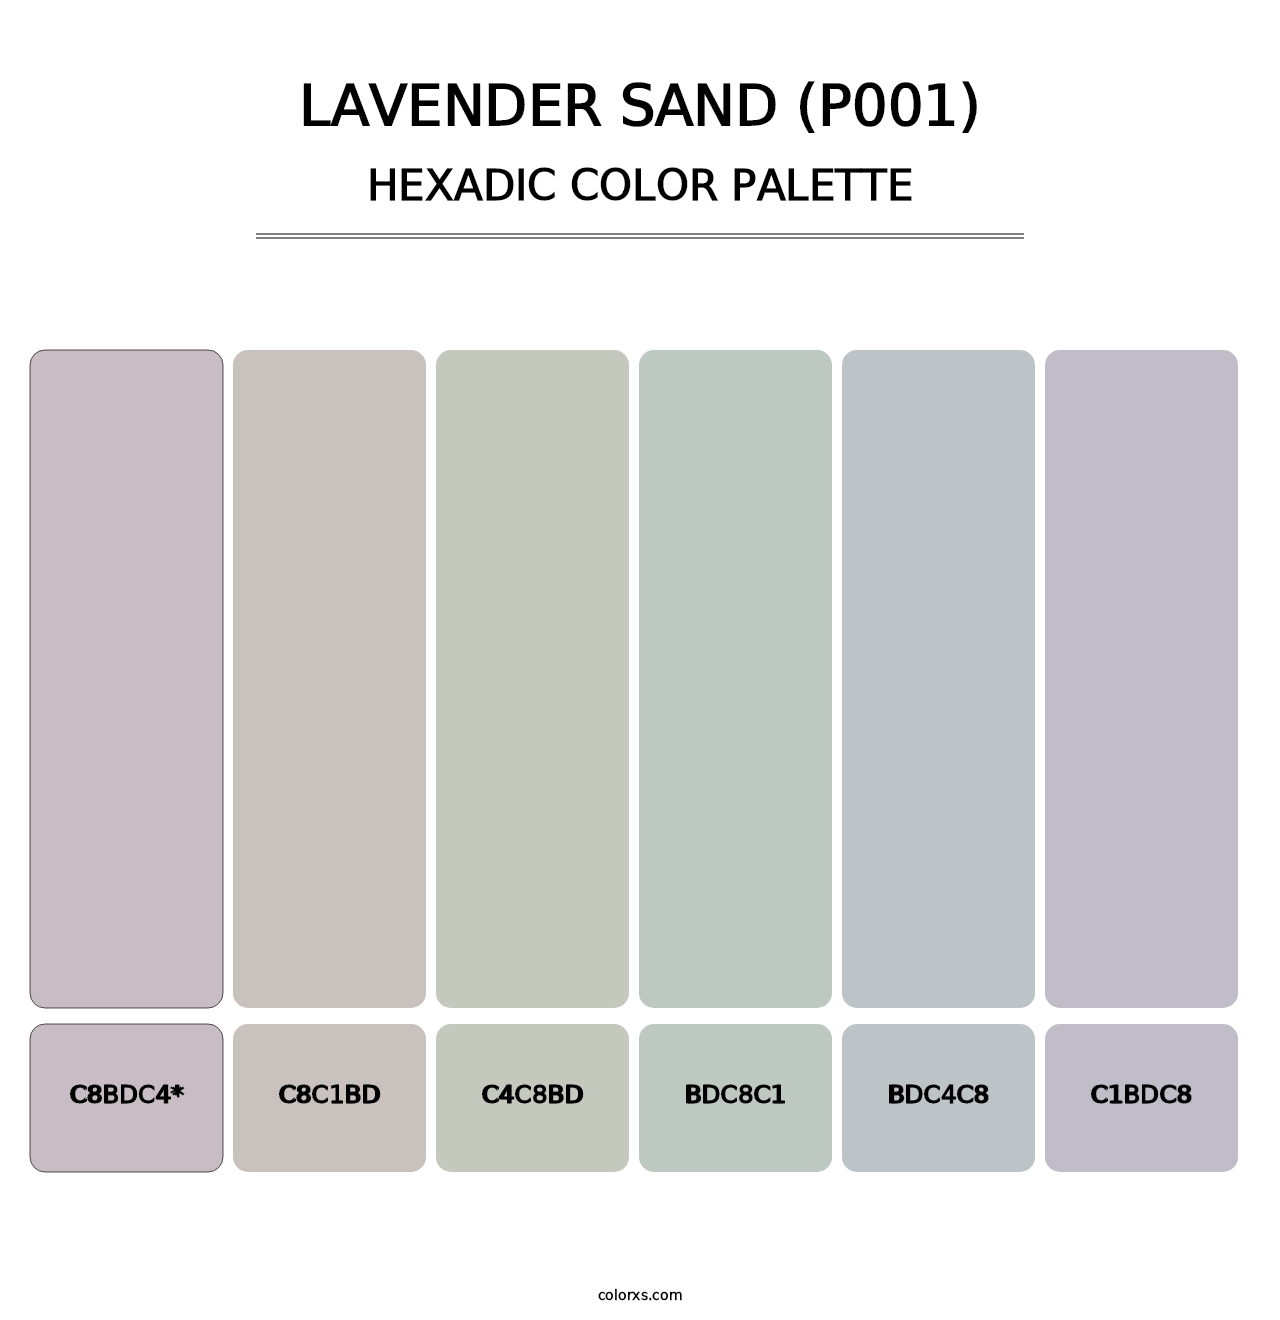 Lavender Sand (P001) - Hexadic Color Palette